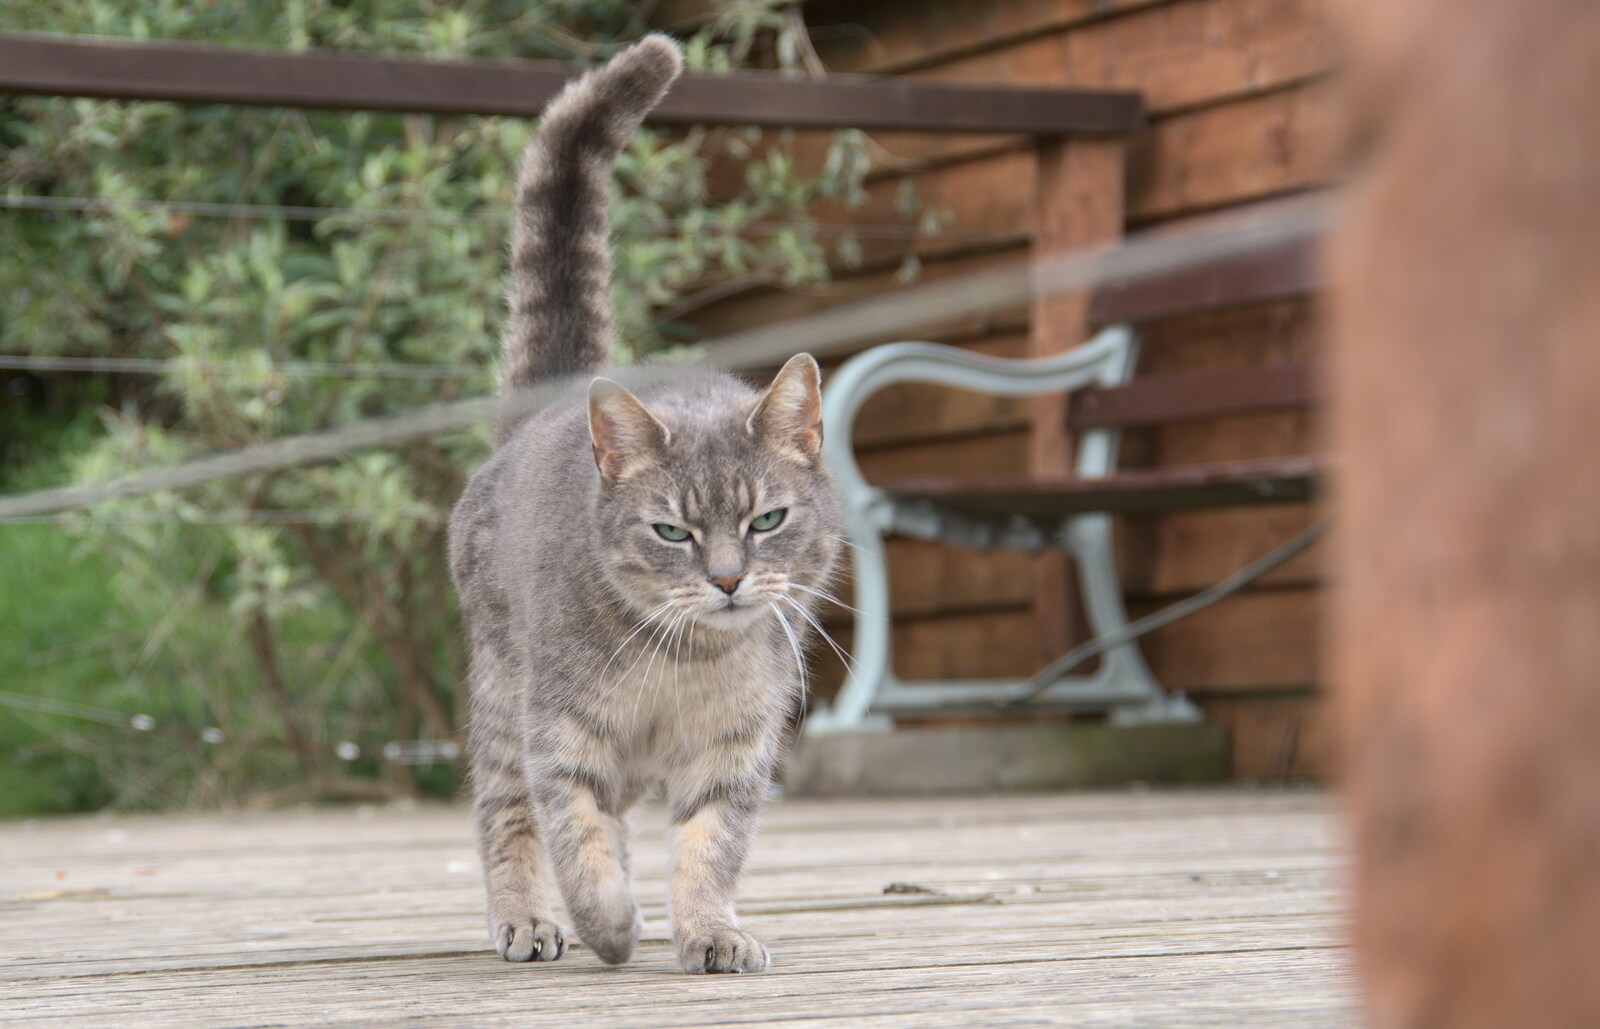 A Trip Down South, New Milton, Hampshire - 9th April 2022: A stripey cat struts around